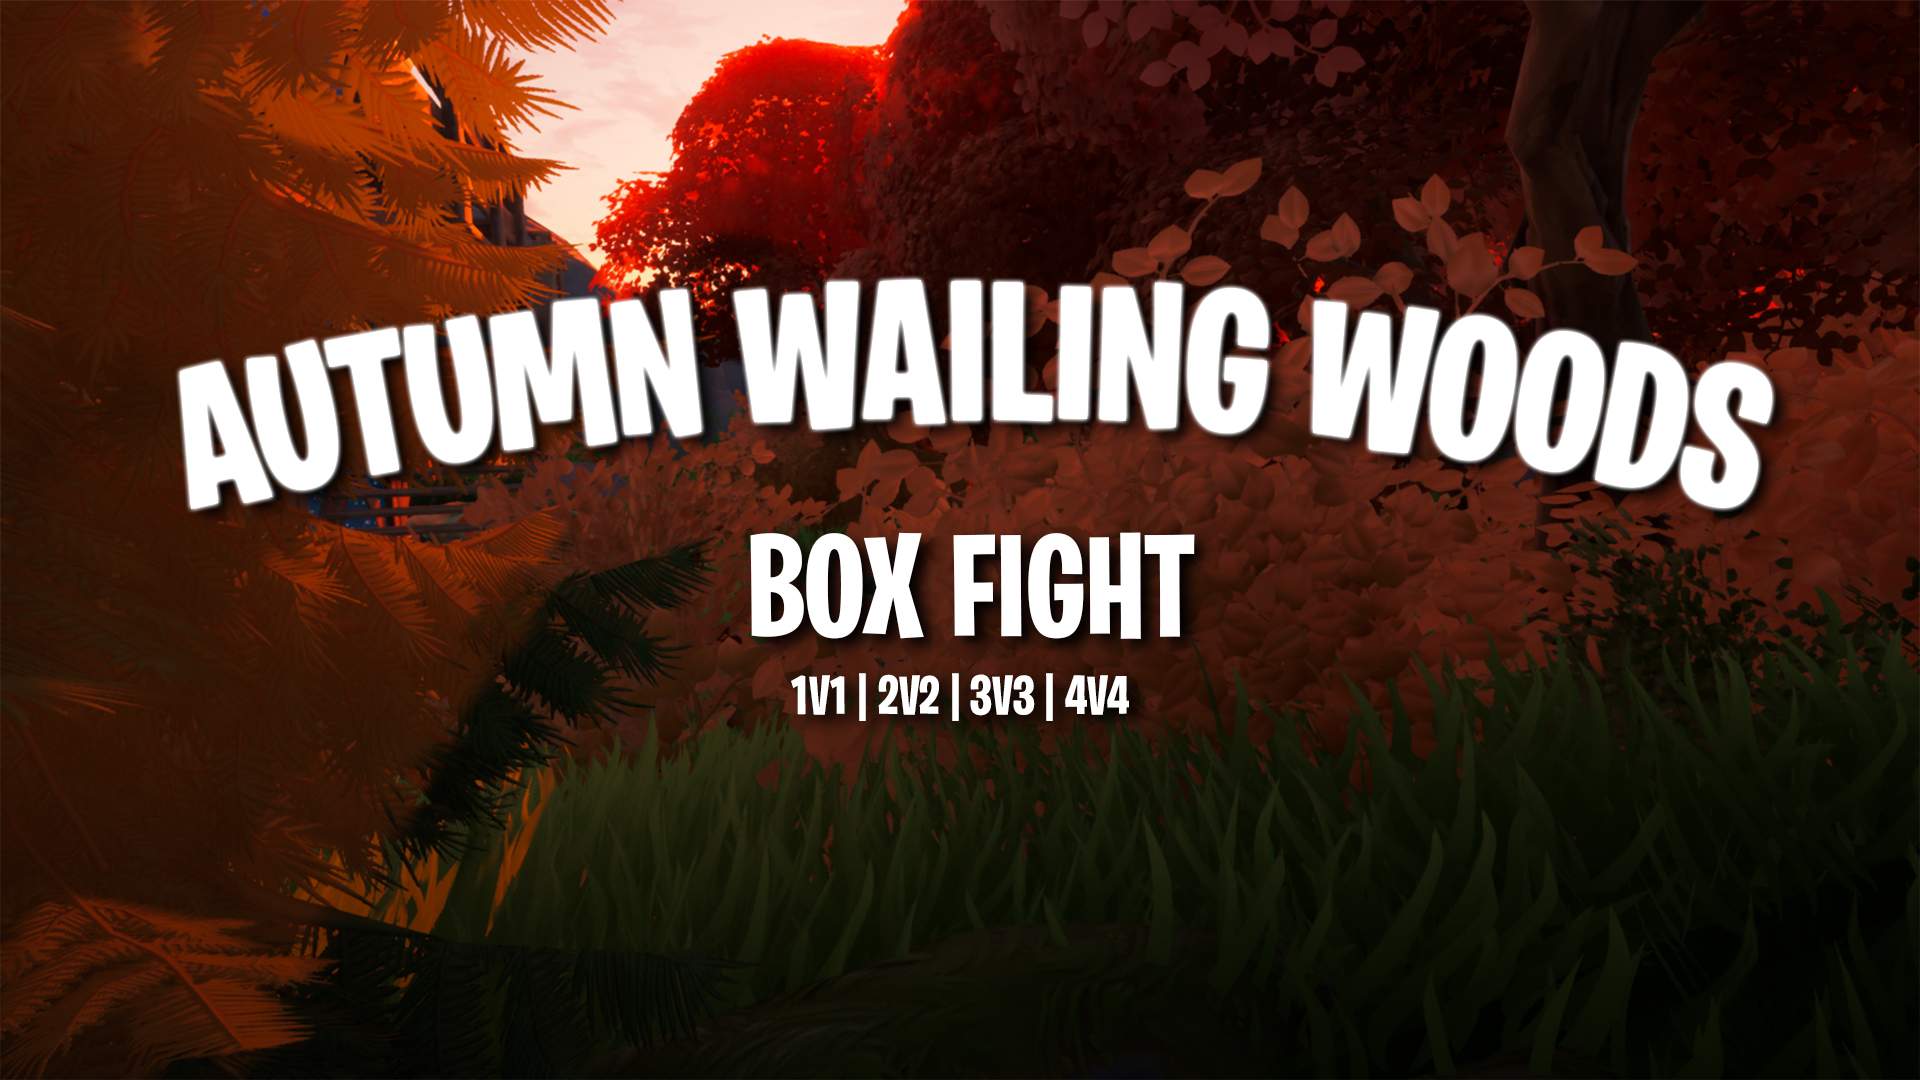 AUTUMN WAILING WOODS - BOX FIGHT